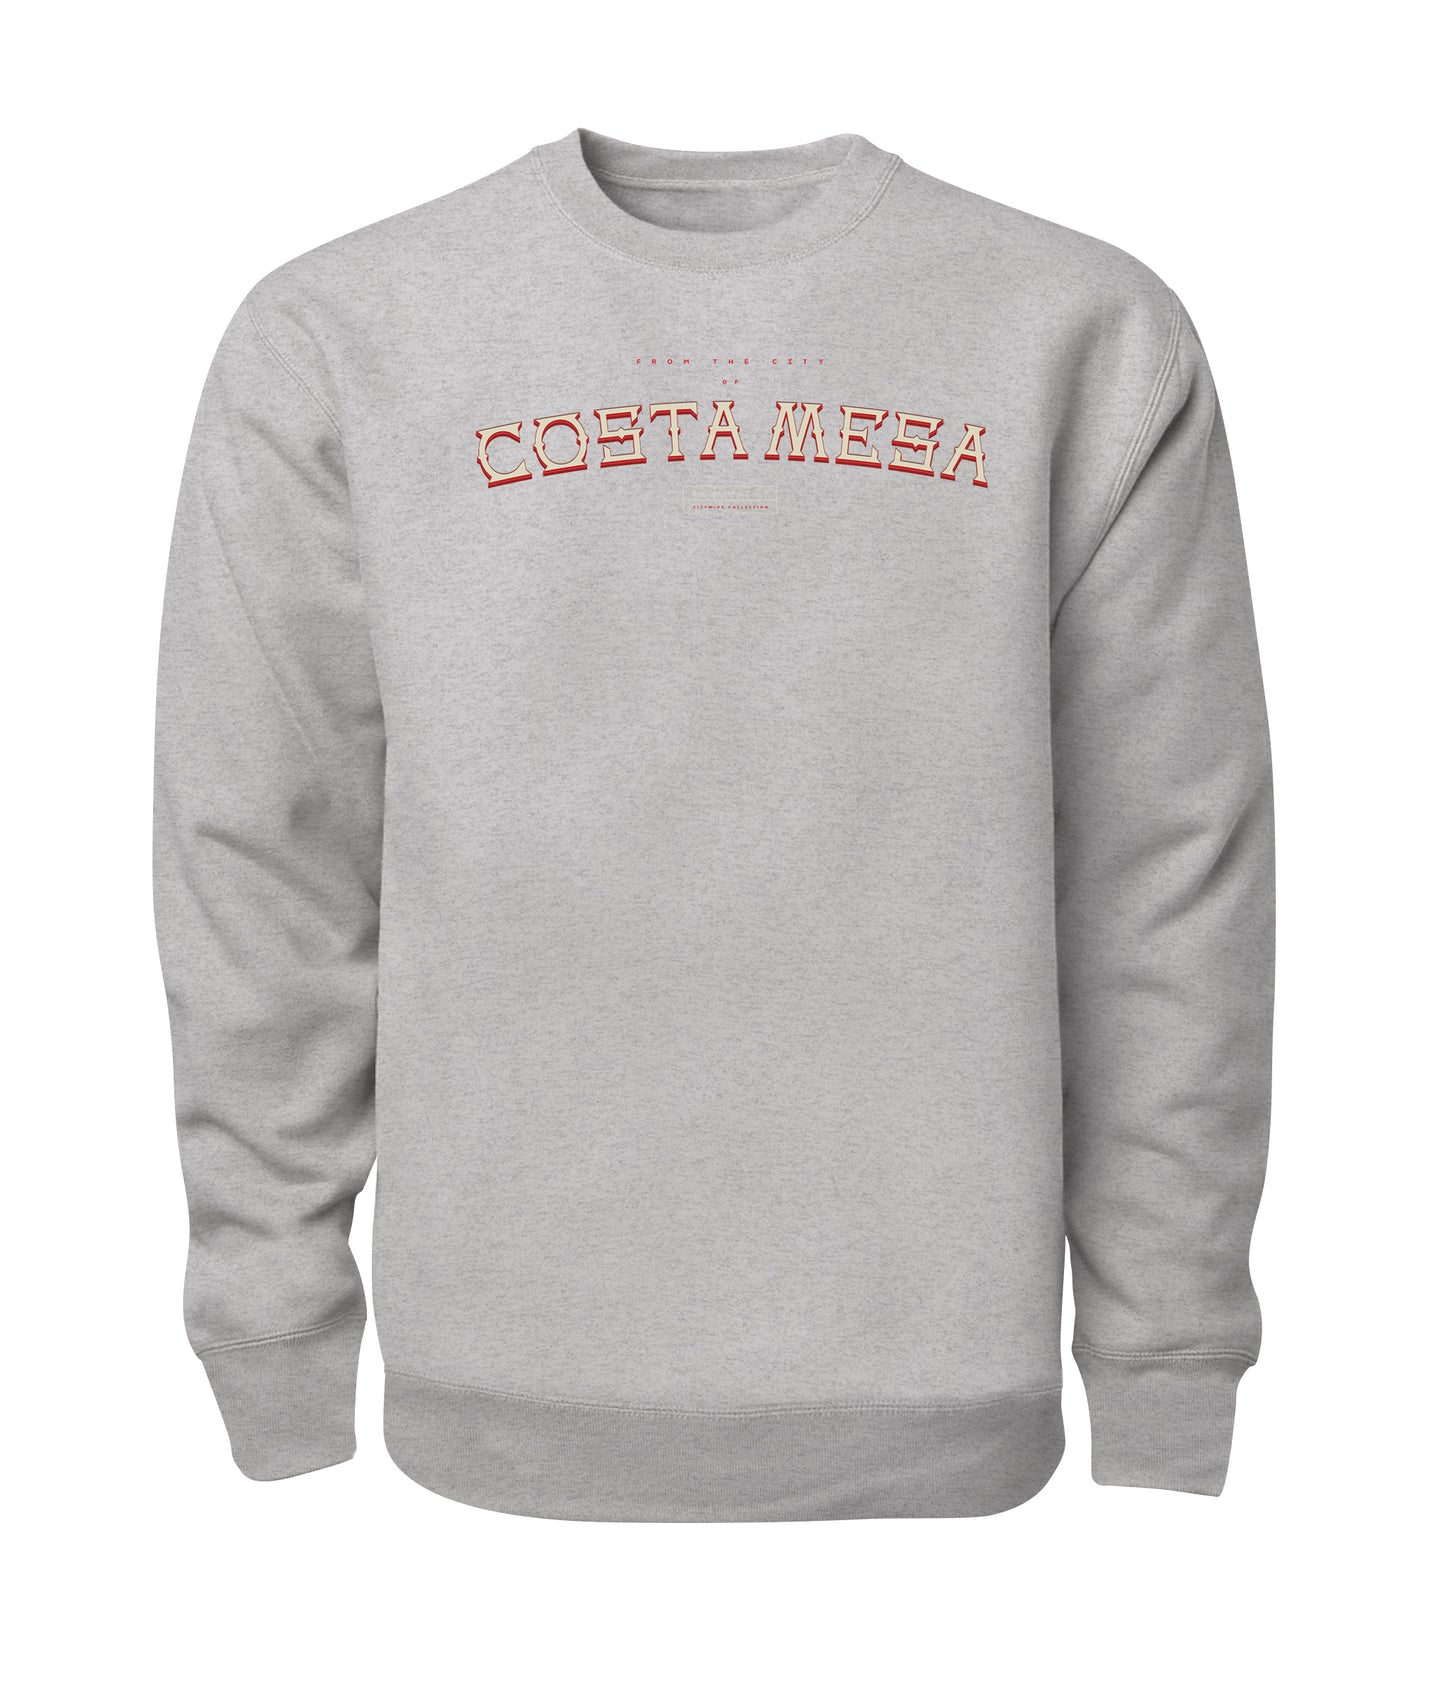 Costa Mesa Stacked Crewneck Sweatshirt